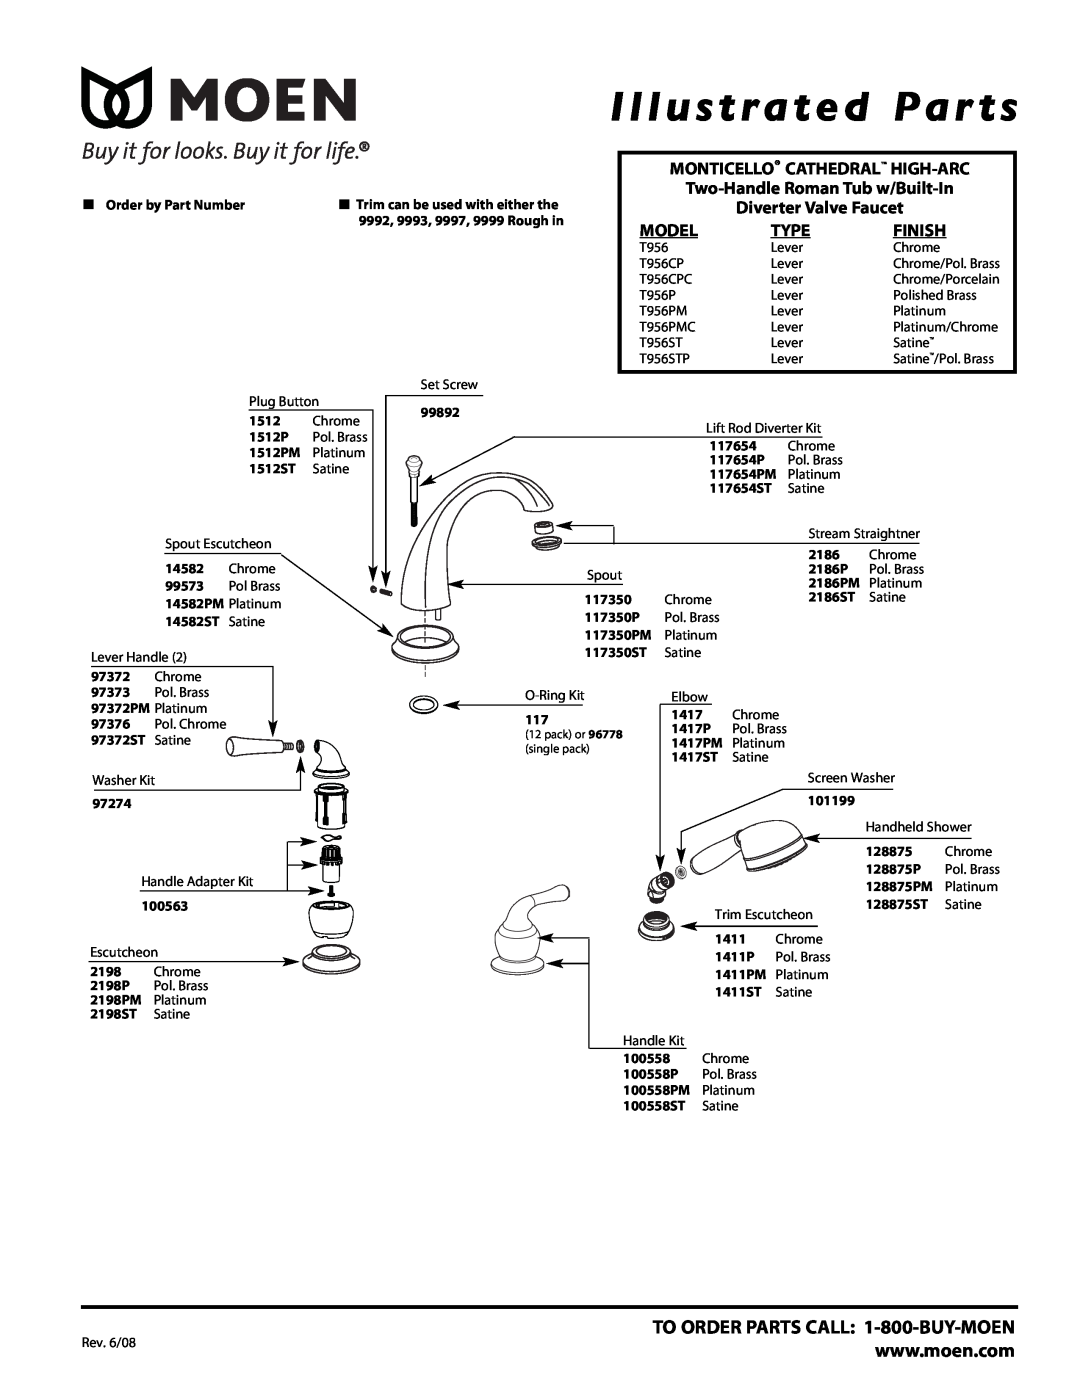 Moen T956STP manual Illustrated Par ts, TO ORDER PARTS CALL 1-800-BUY-MOEN, Model, Type, Finish, Diverter Valve Faucet 